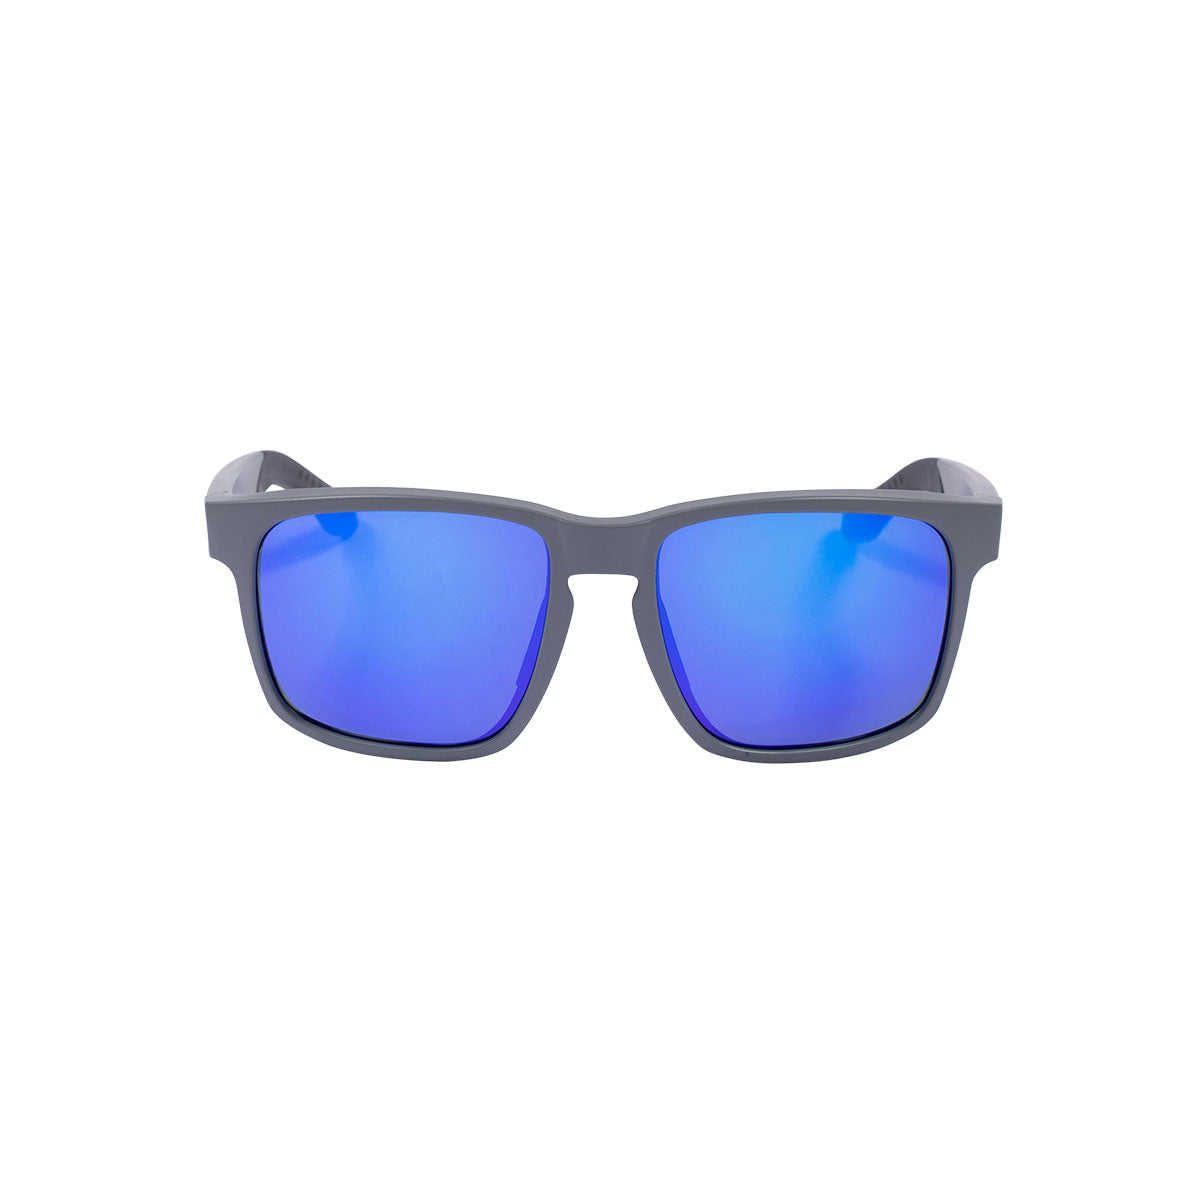 Key West R1 Optics Lifestyle Sunglasses XX2i by